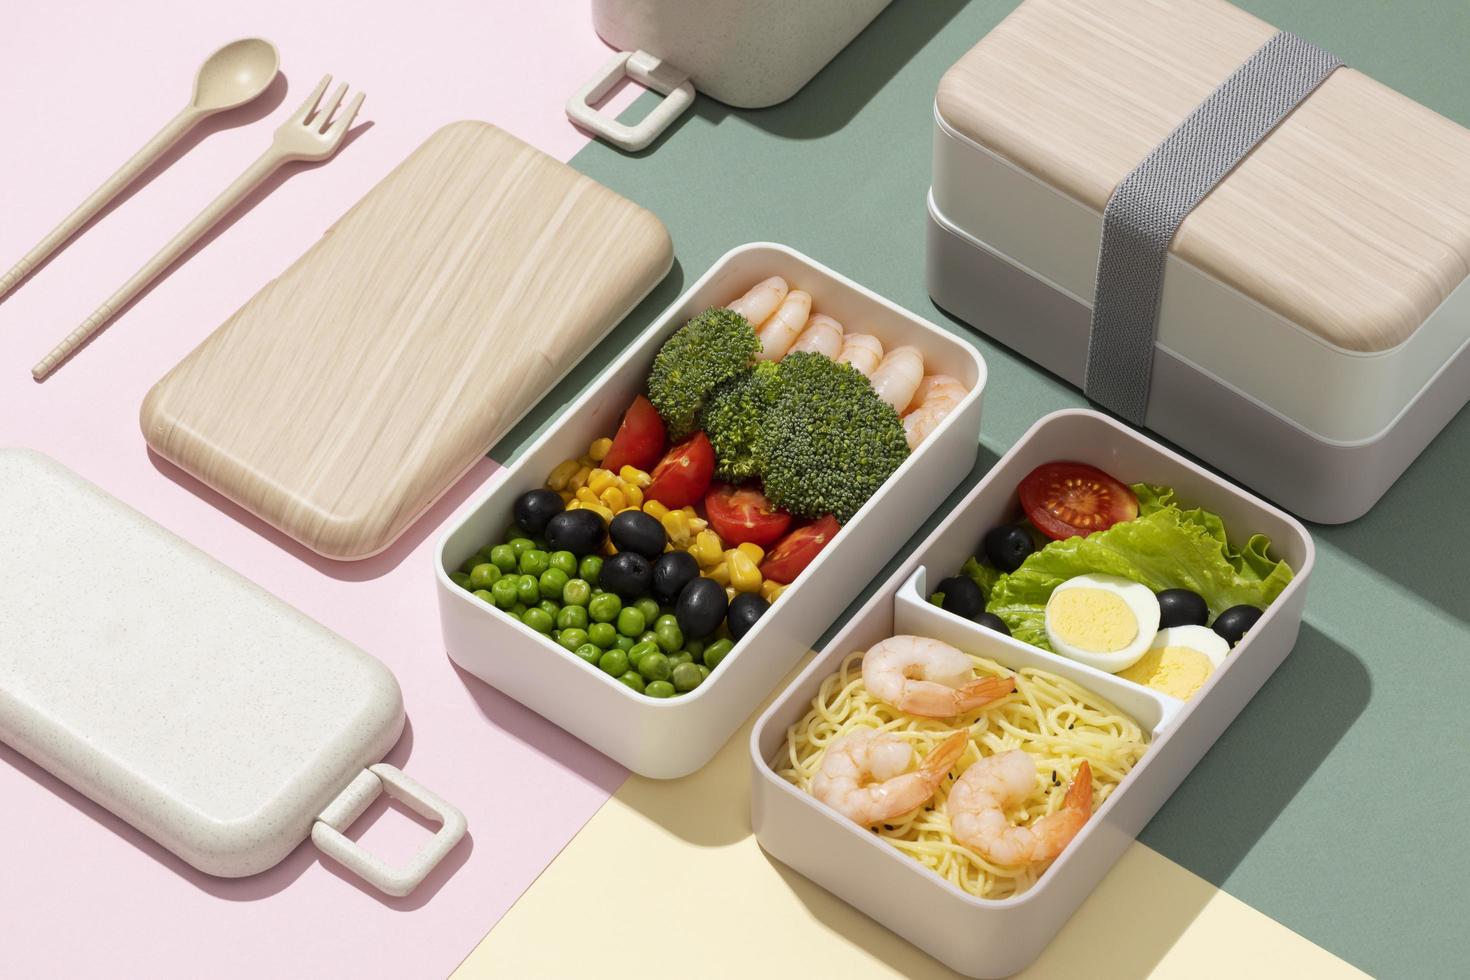 bovenaanzicht samenstelling eten japanse bento box foto